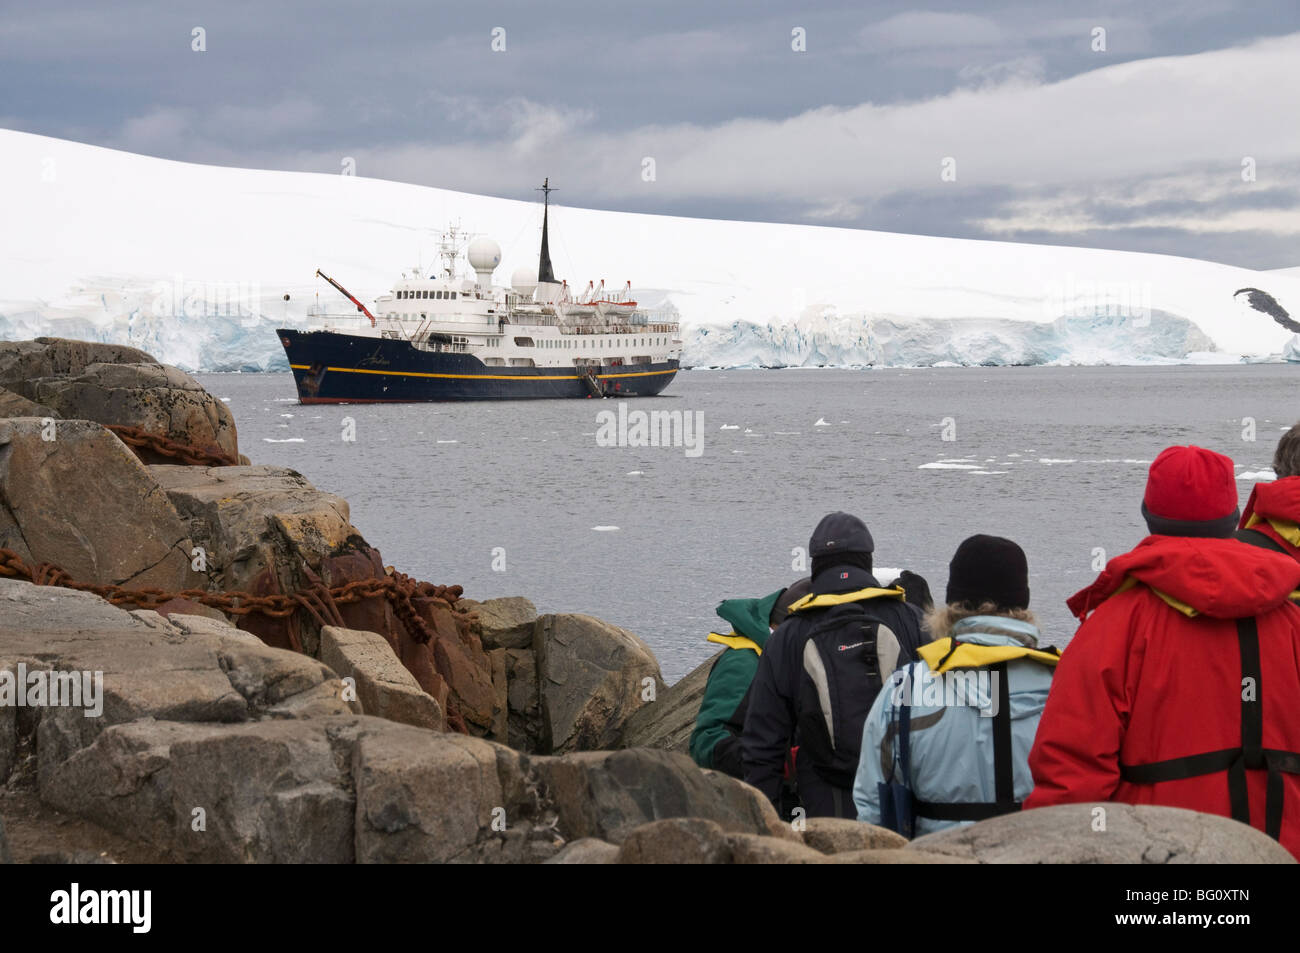 Touristenboot, Port Lockroy, antarktische Halbinsel, Antarktis, Polarregionen Stockfoto